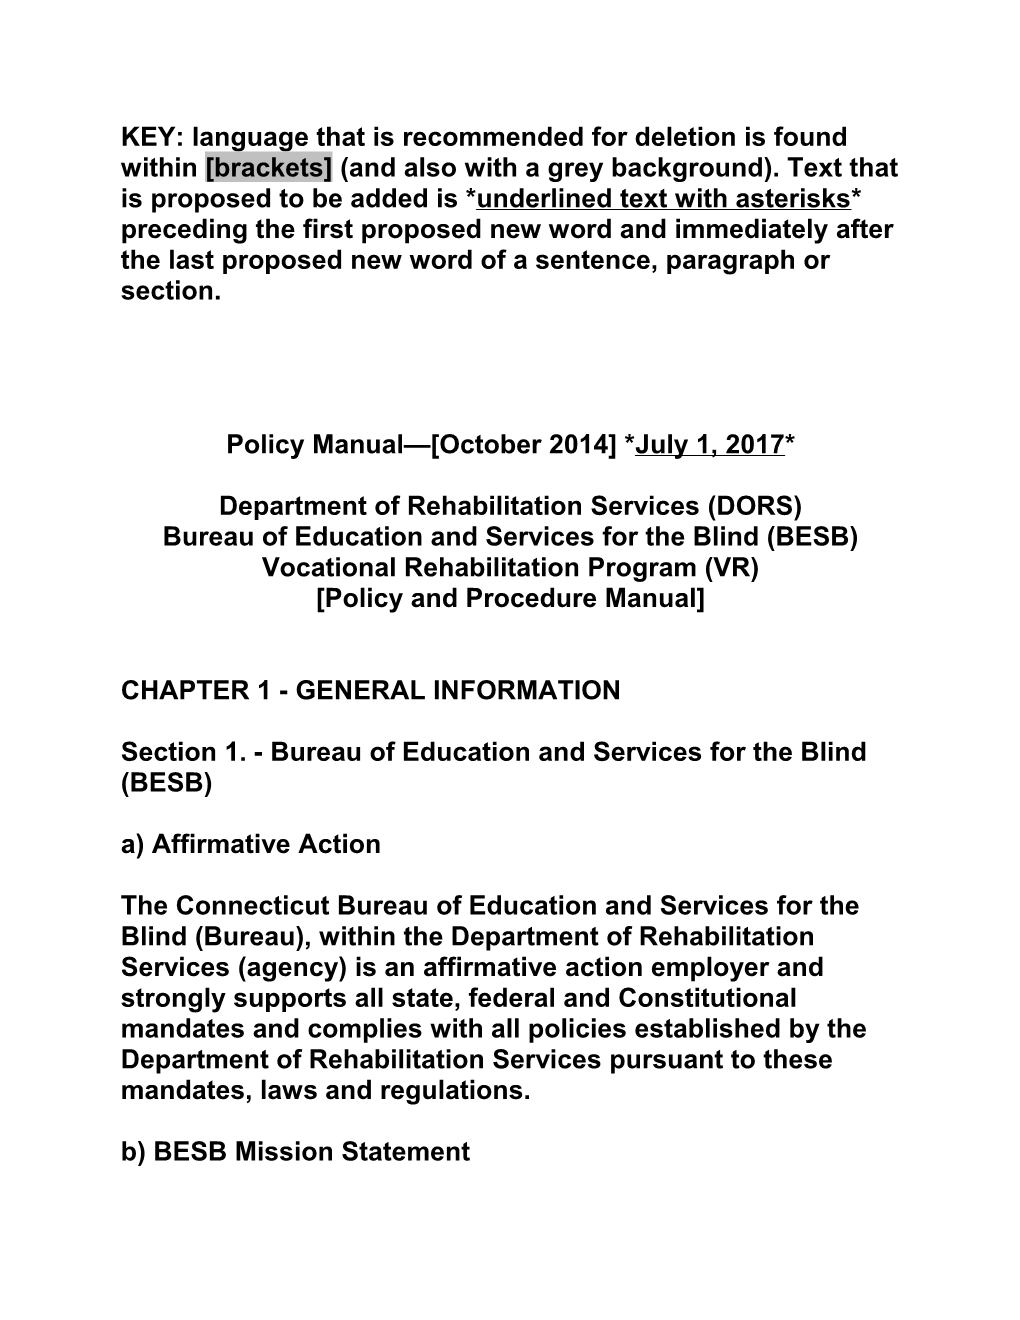 Department of Rehabilitation Services (DORS)